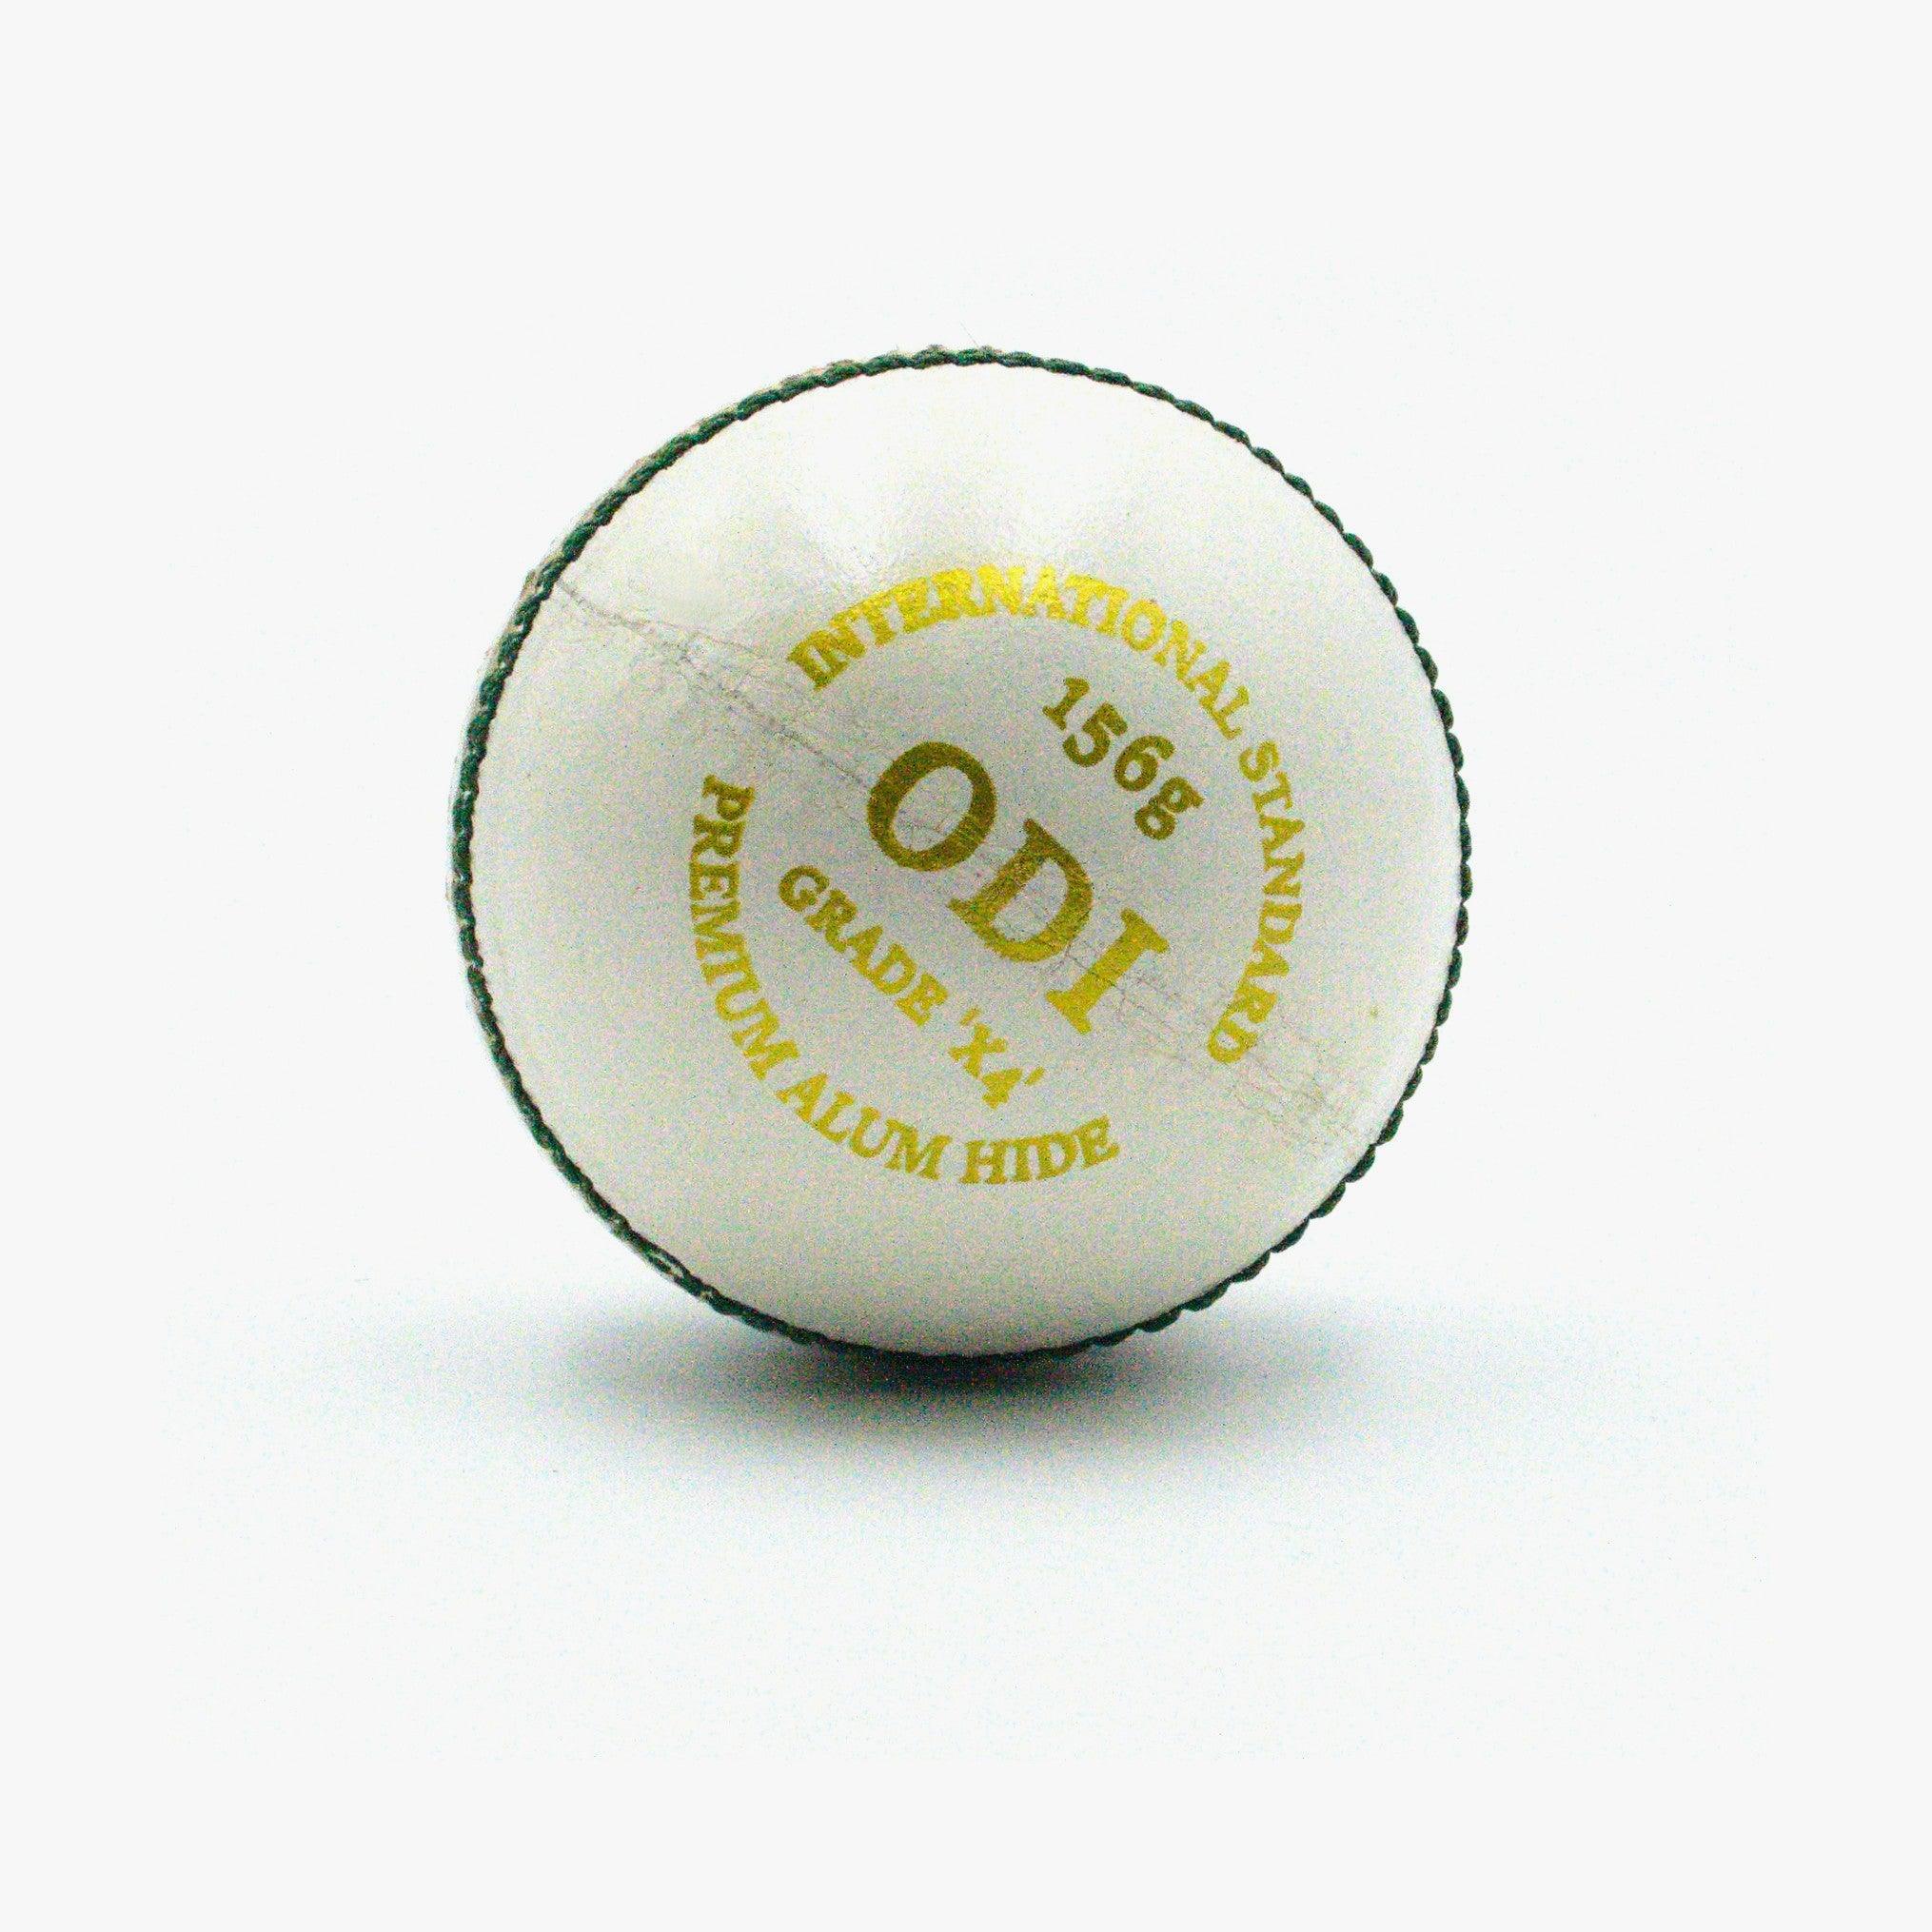 AT ODI WHITE 4pce 156g Cricket Ball - AT Sports